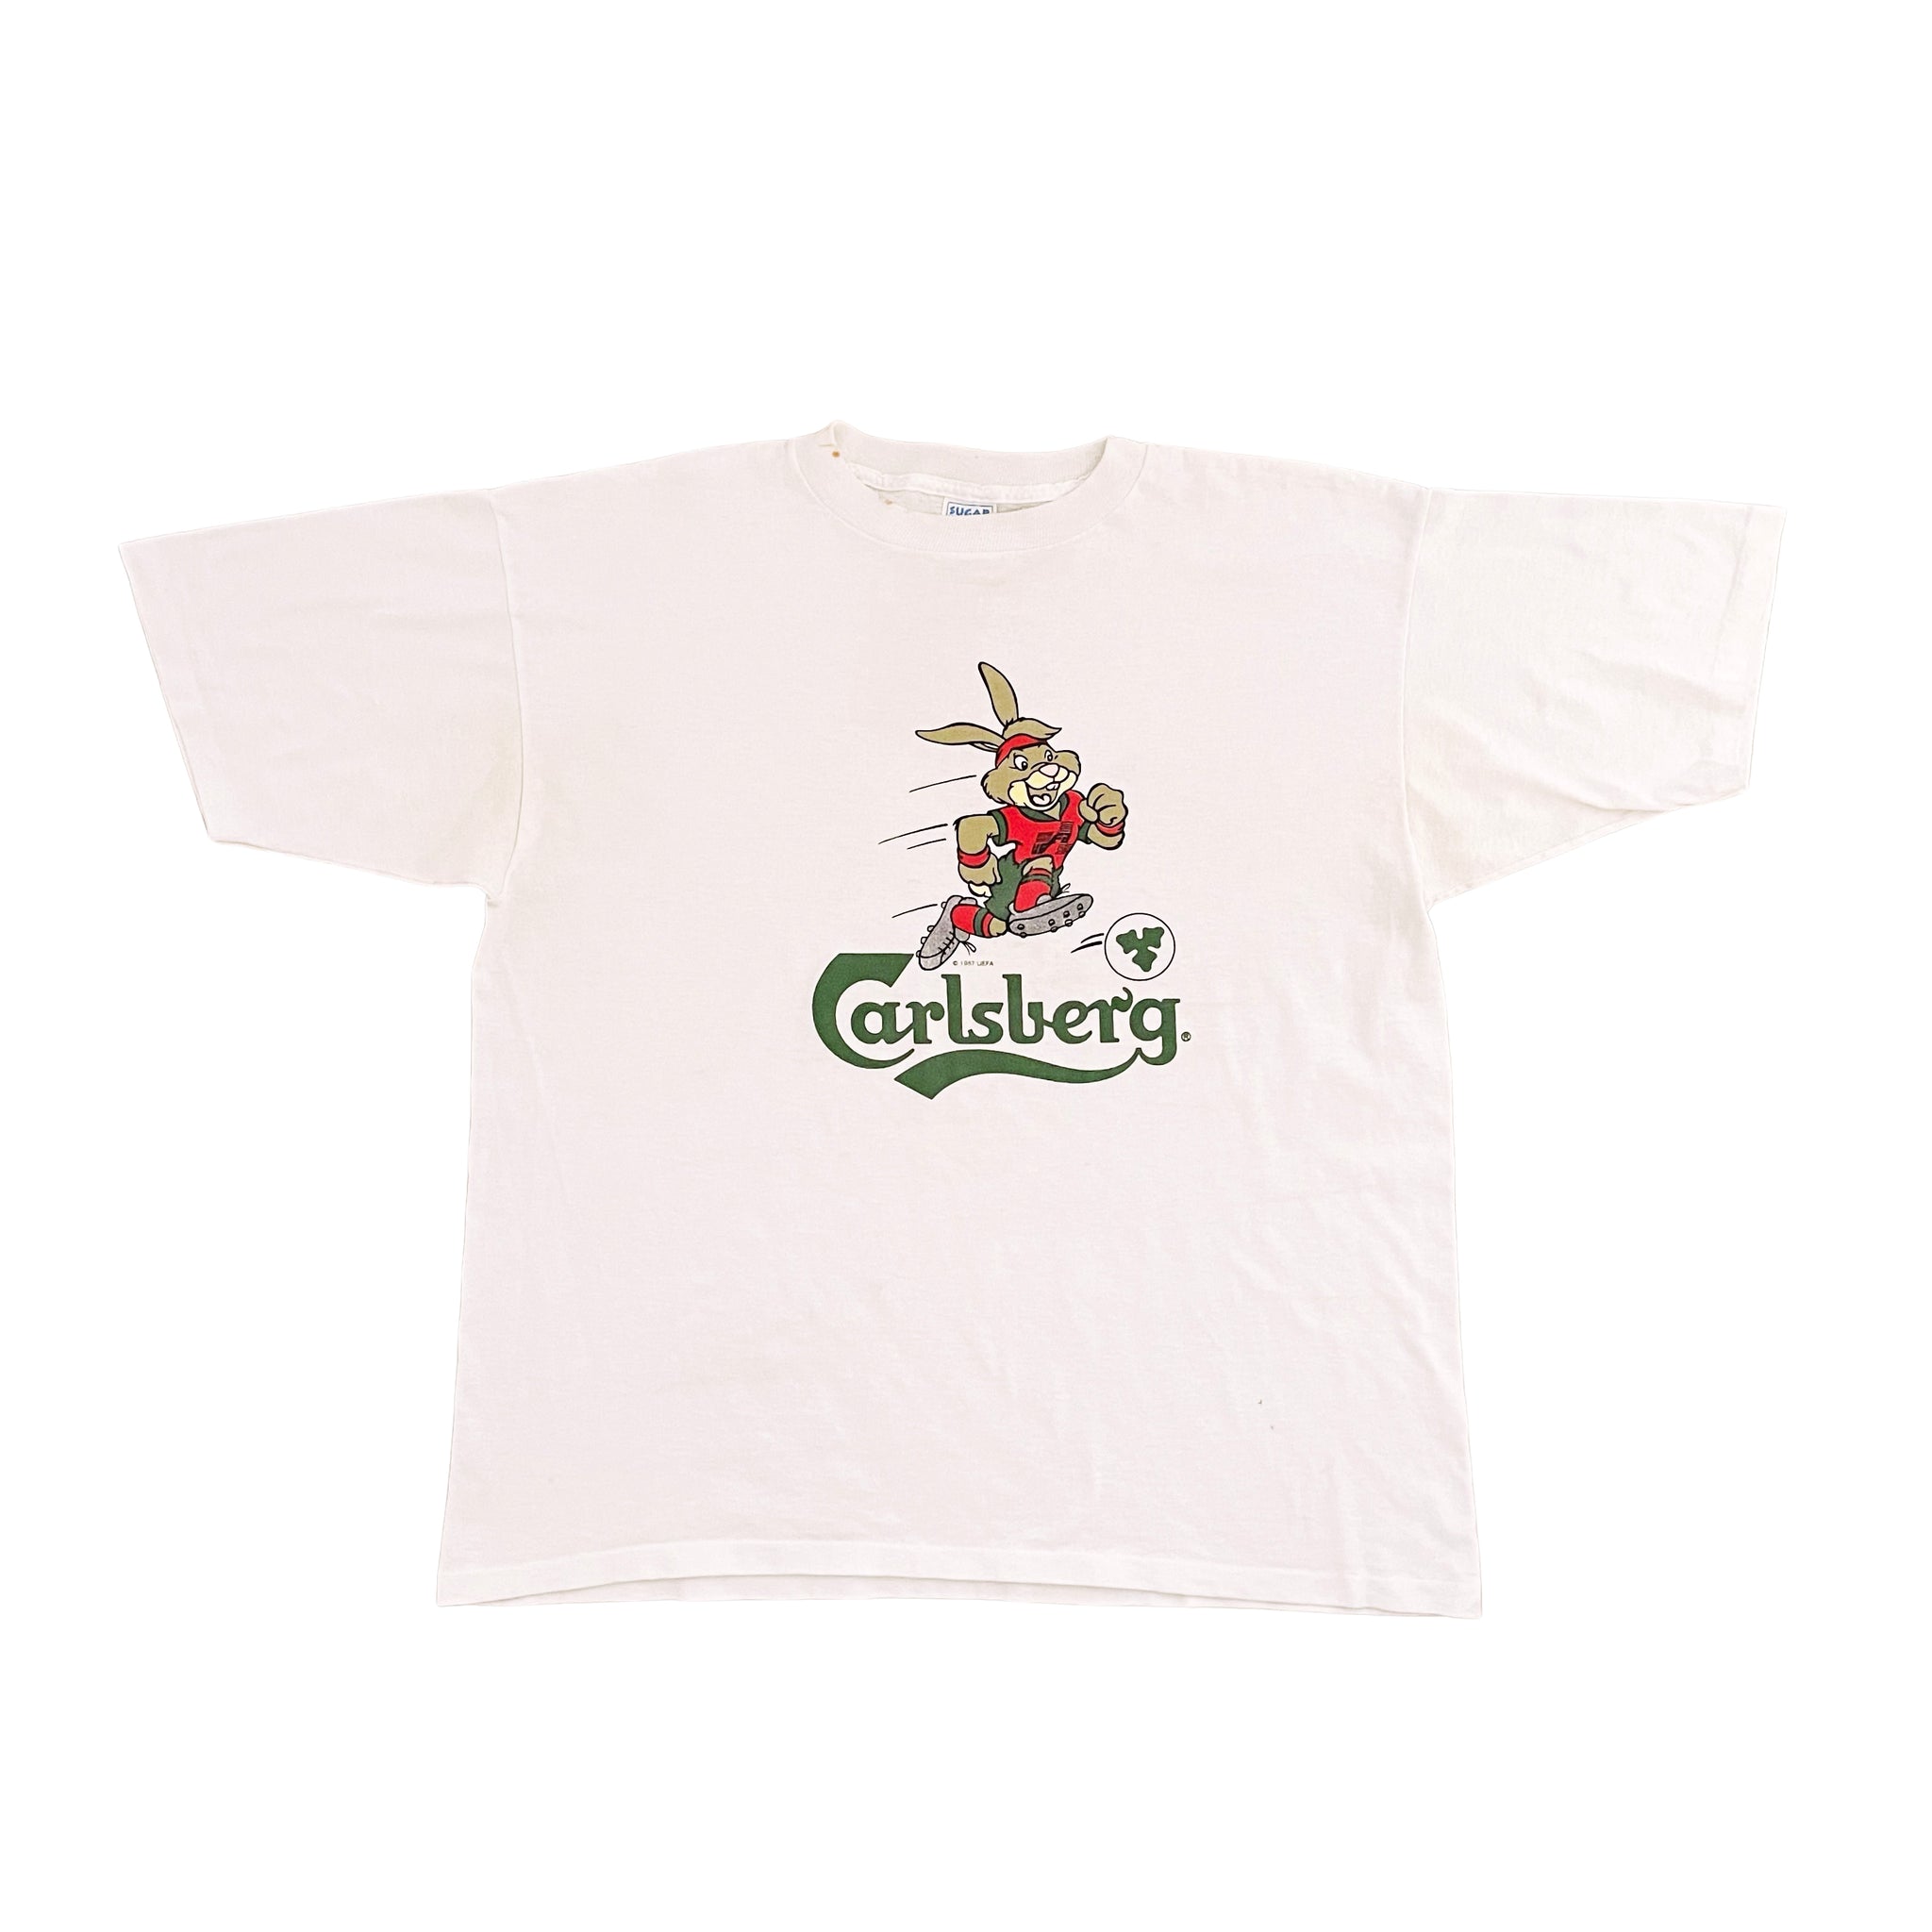 1992 Euro Carlsberg Portugal T-Shirt - L